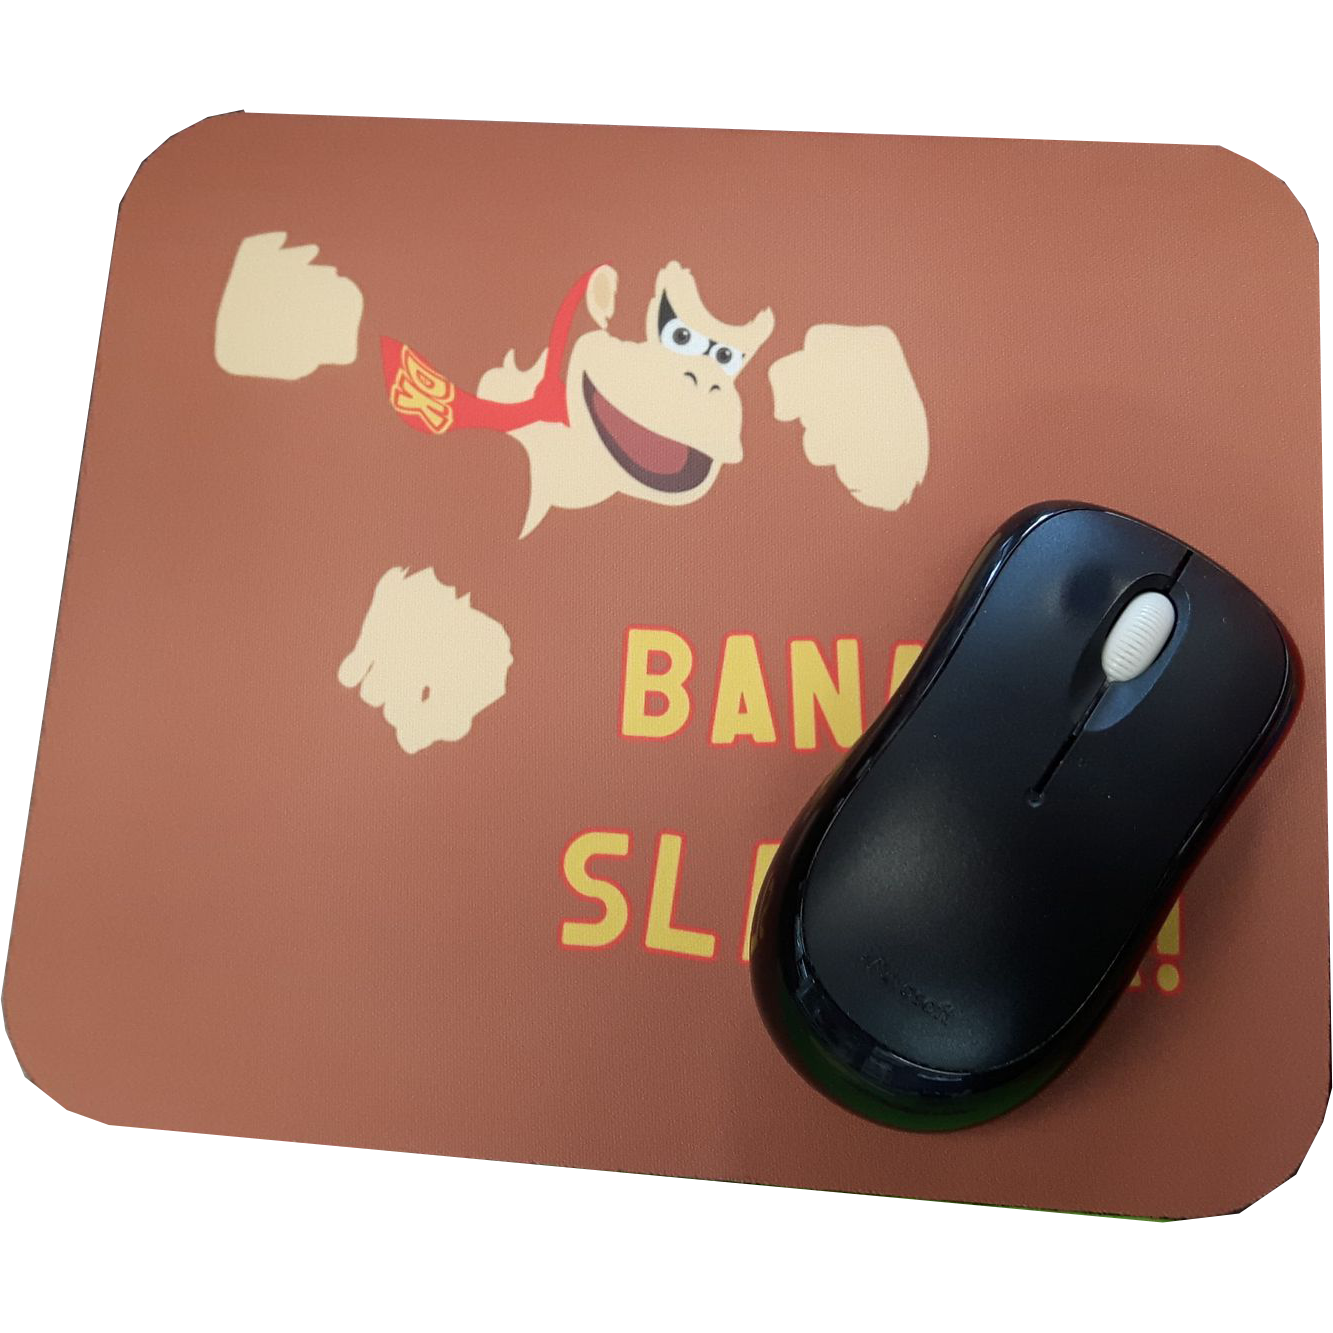 Mouse Pad - Donkey Kong - "Banana Slamma!"